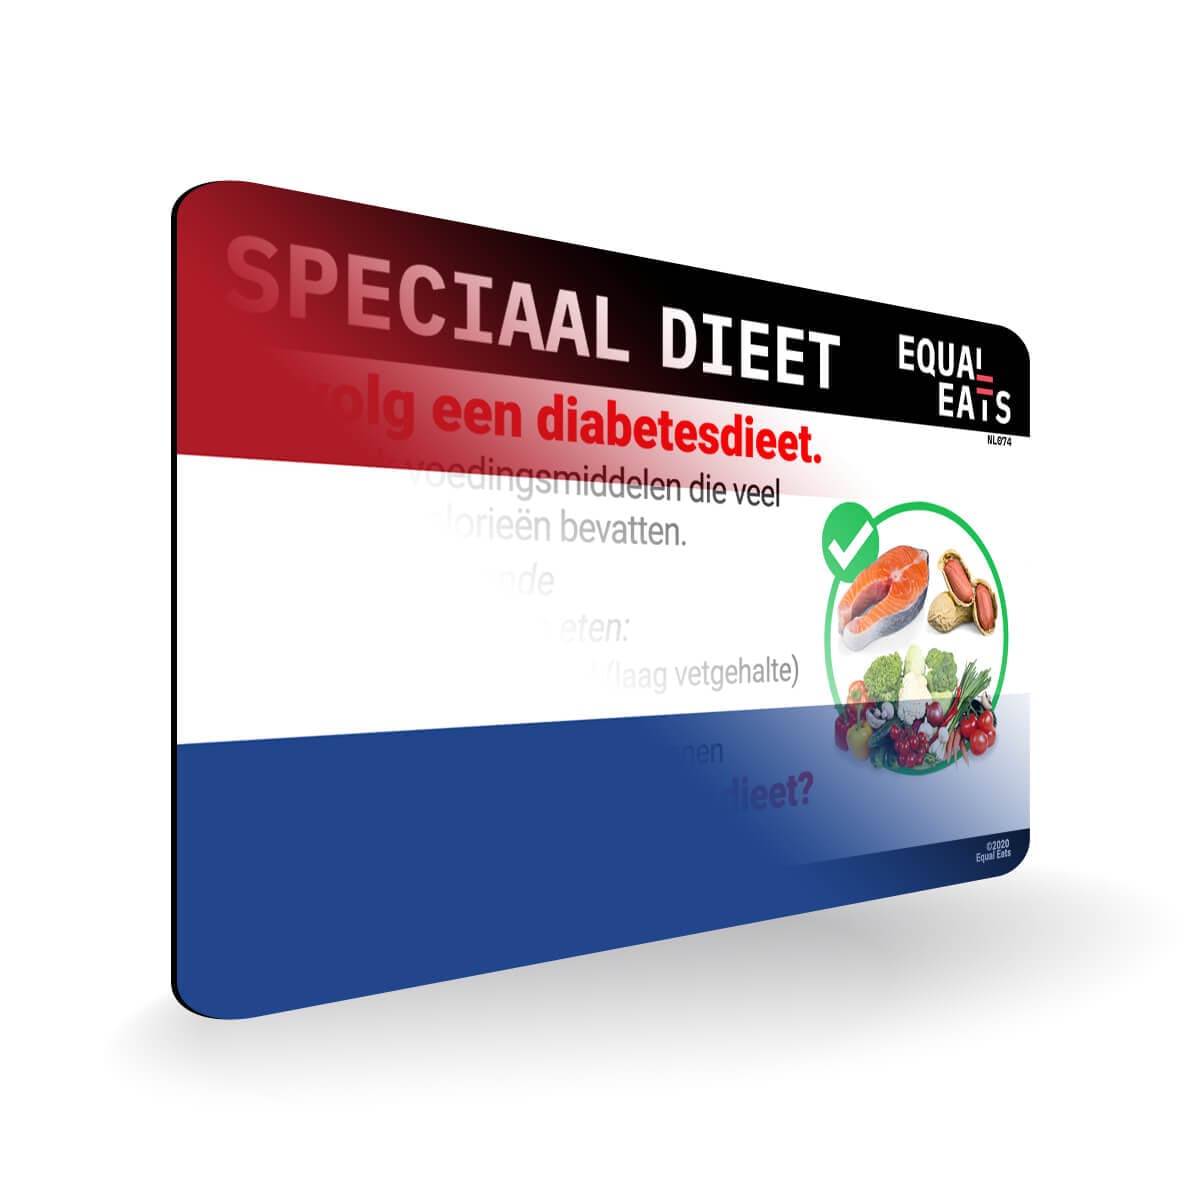 Diabetic Diet in Dutch. Diabetes Card for Netherlands Travel